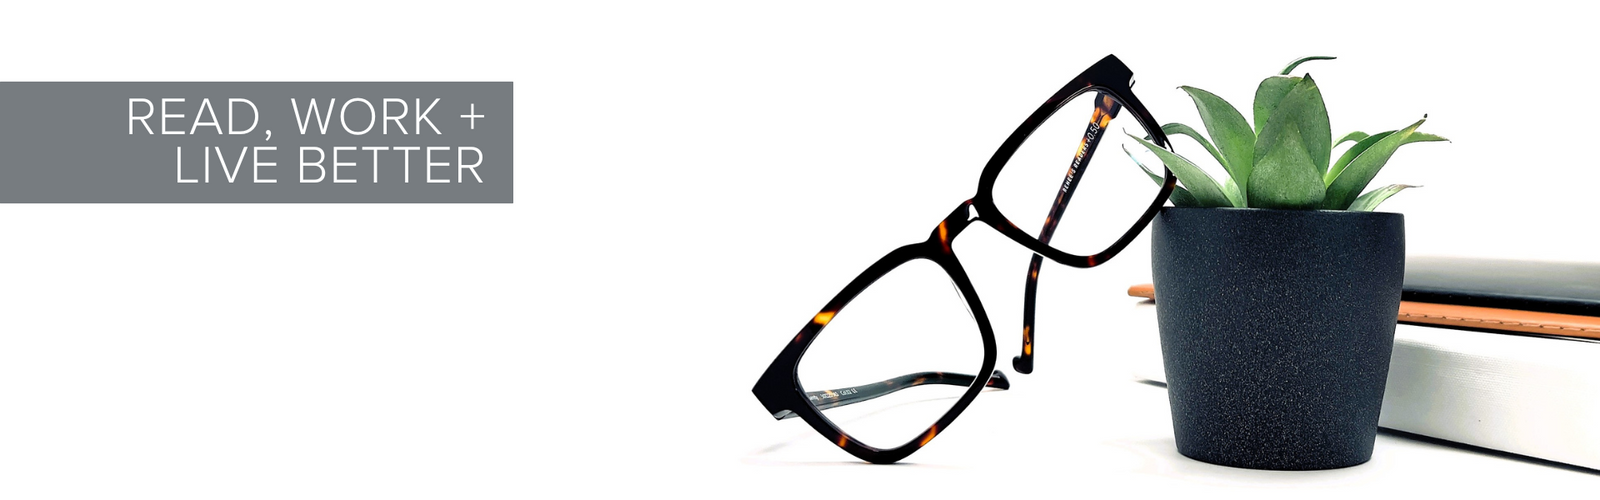 Best Quality Reading Glasses - RENEE'S READERS